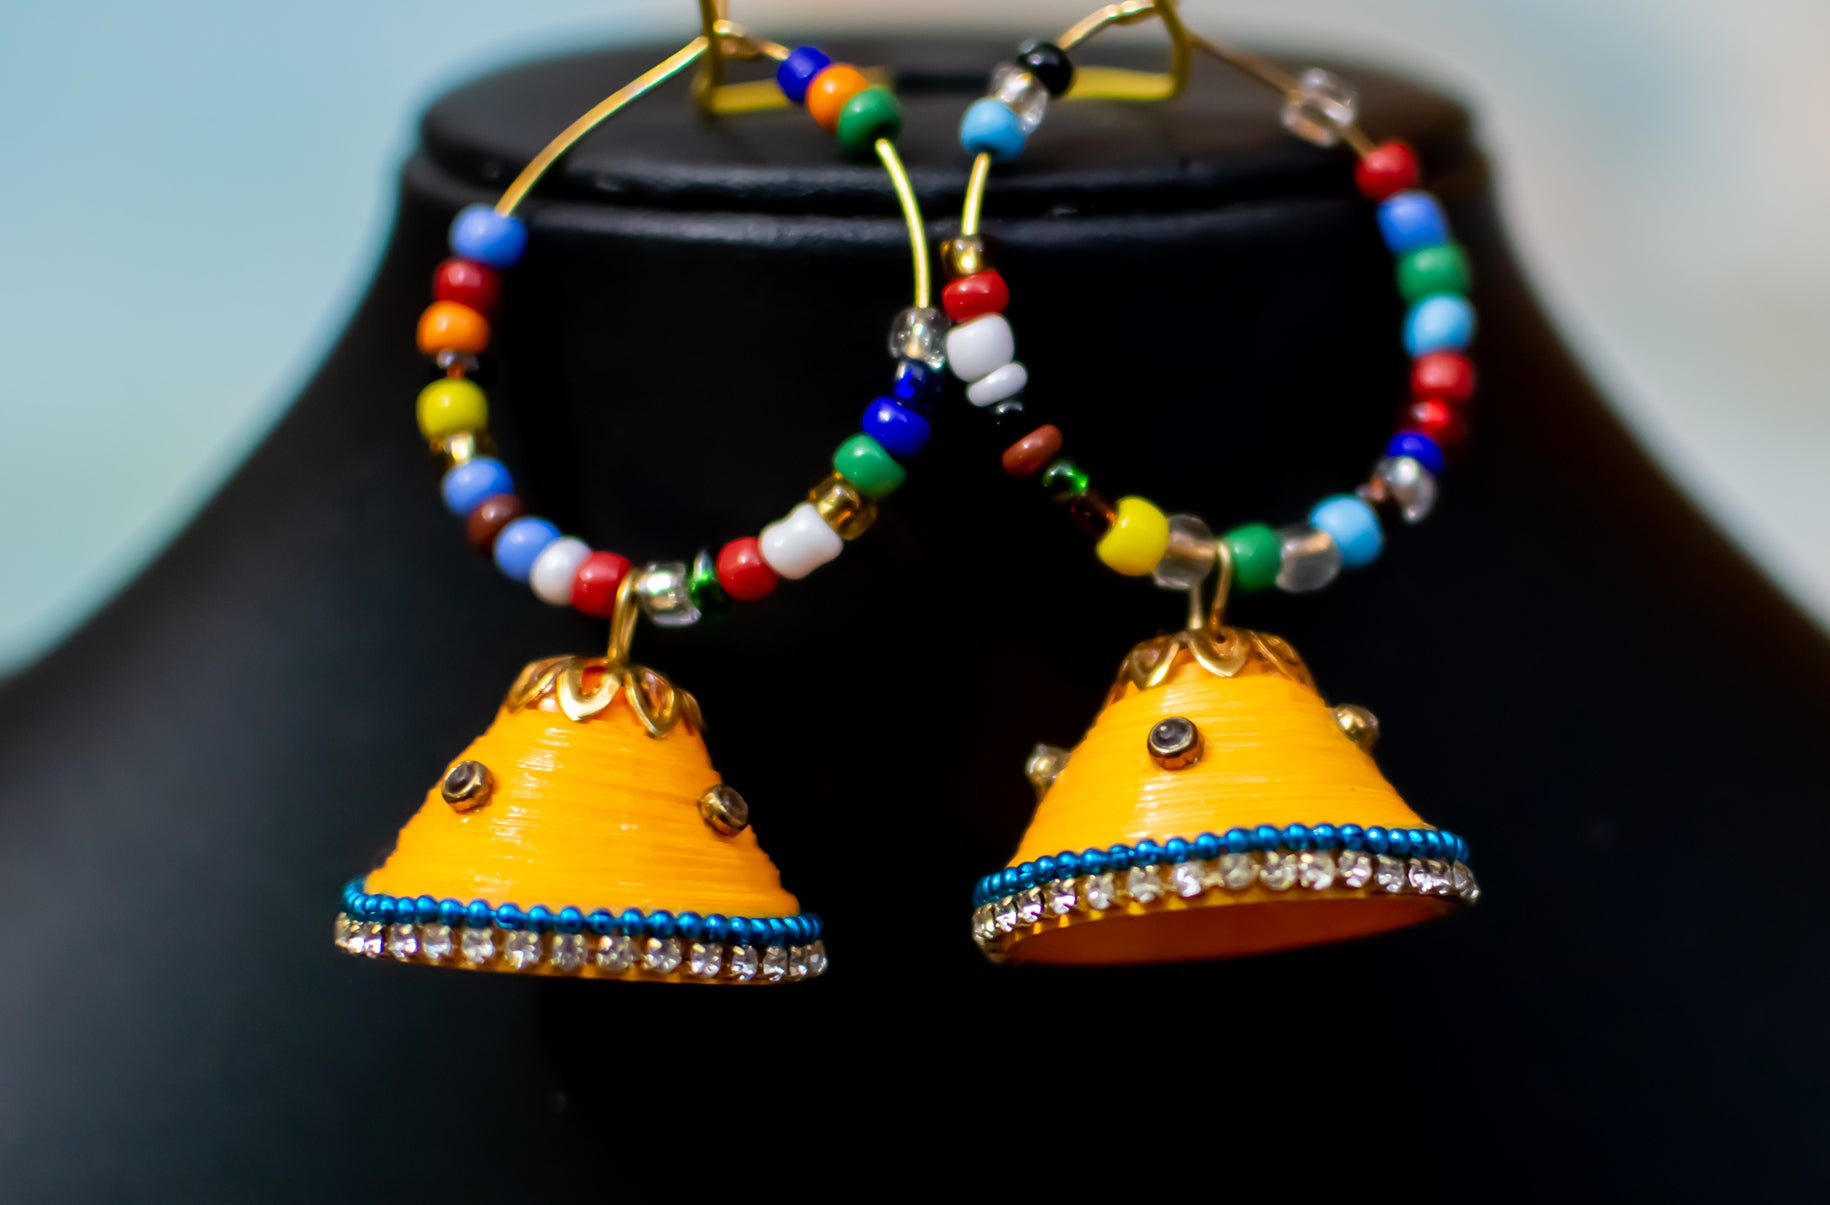 Nicte Handmade Bronze Earrings | Patina Finish